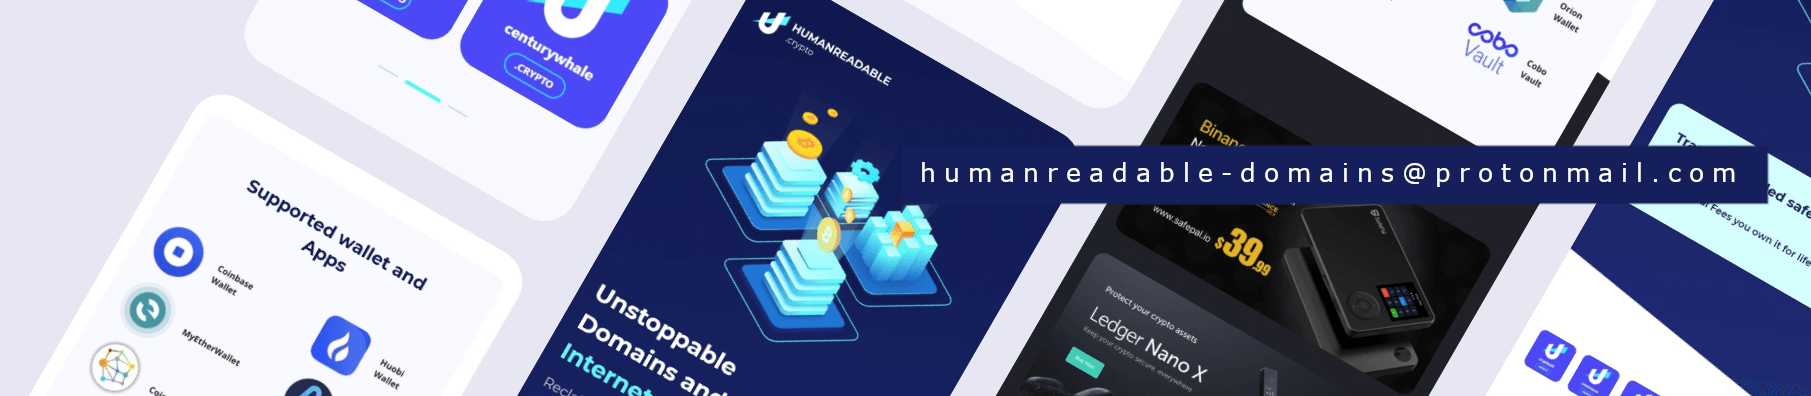 humanreadable banner